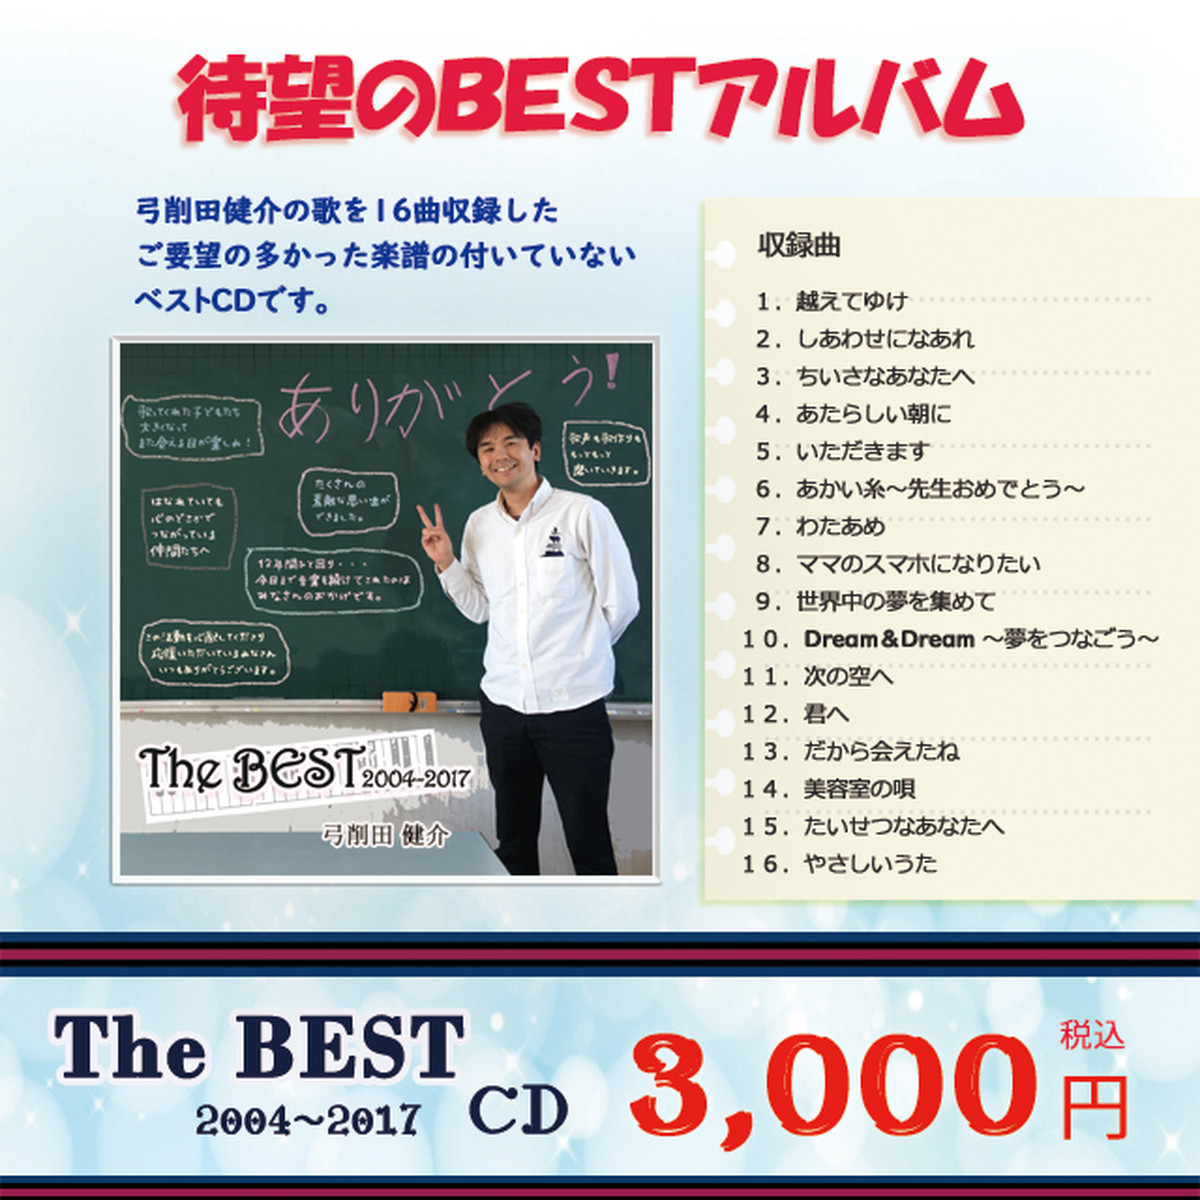 The Best 04 17 弓削田健介ベストアルバム Yugemusic